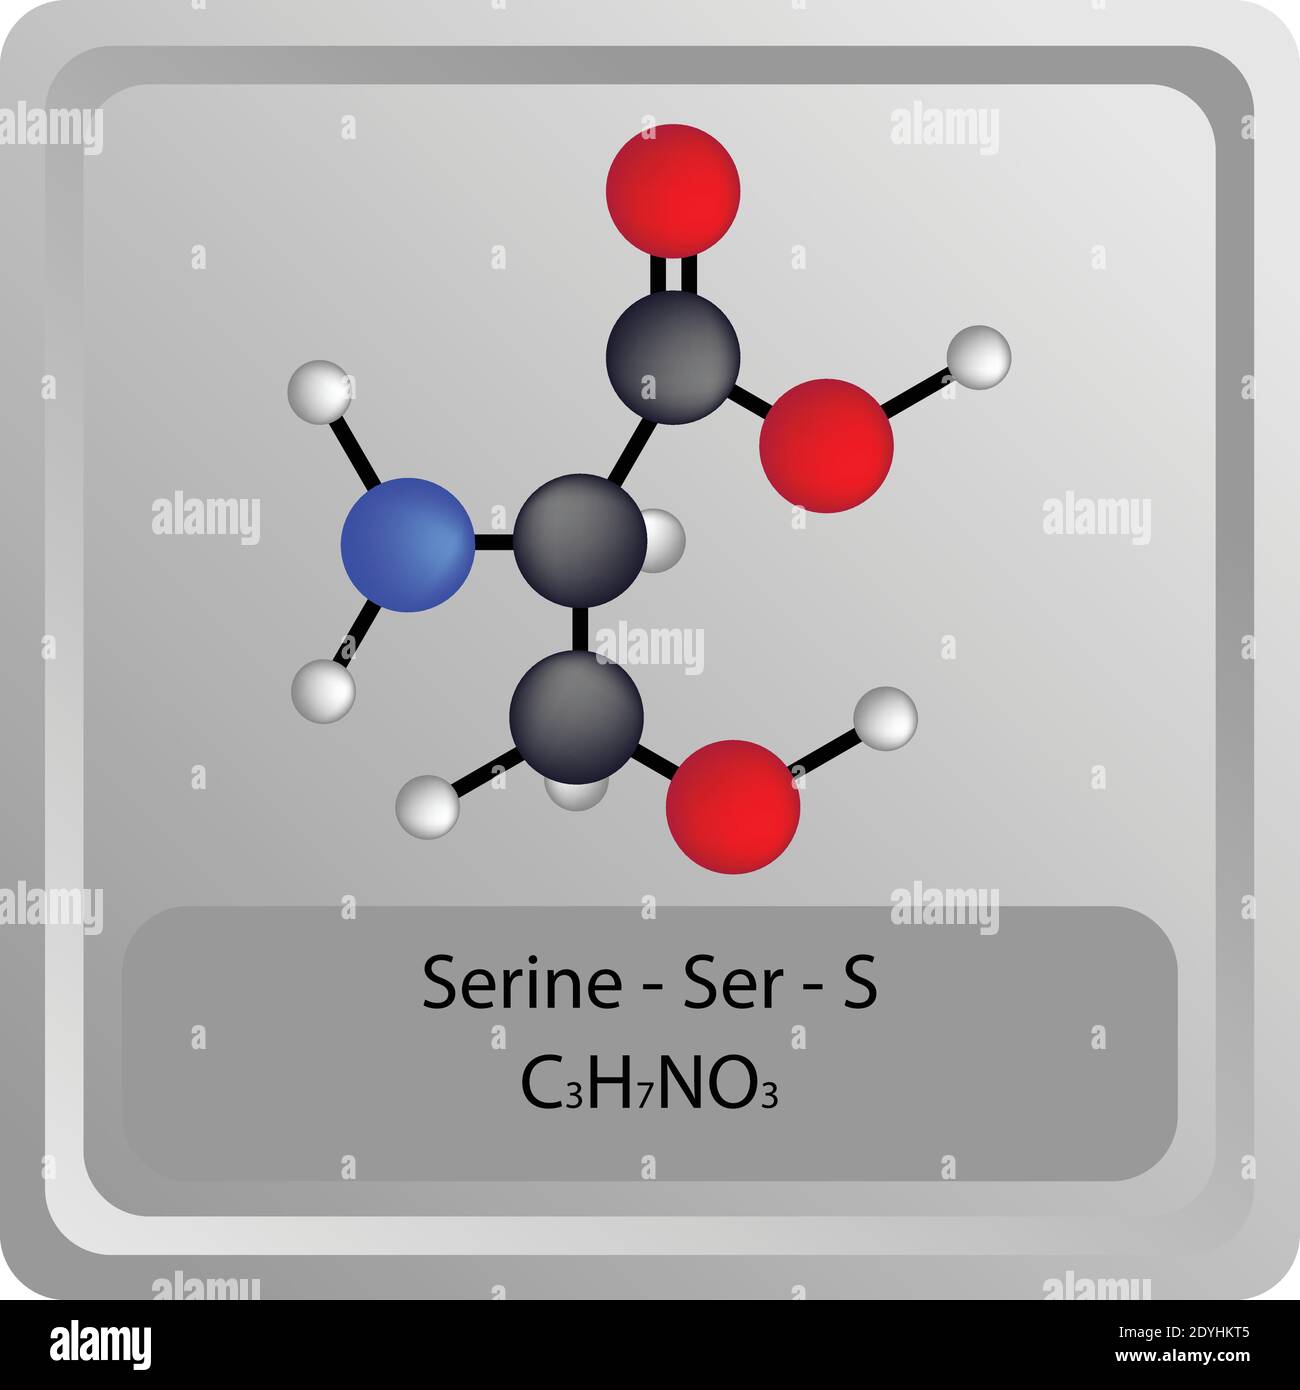 Serine – Ser – S Amino Acid chemical structure. Molecular formula ball and stick model Molecule. Biochemistry, medicine and science education. Stock Vector